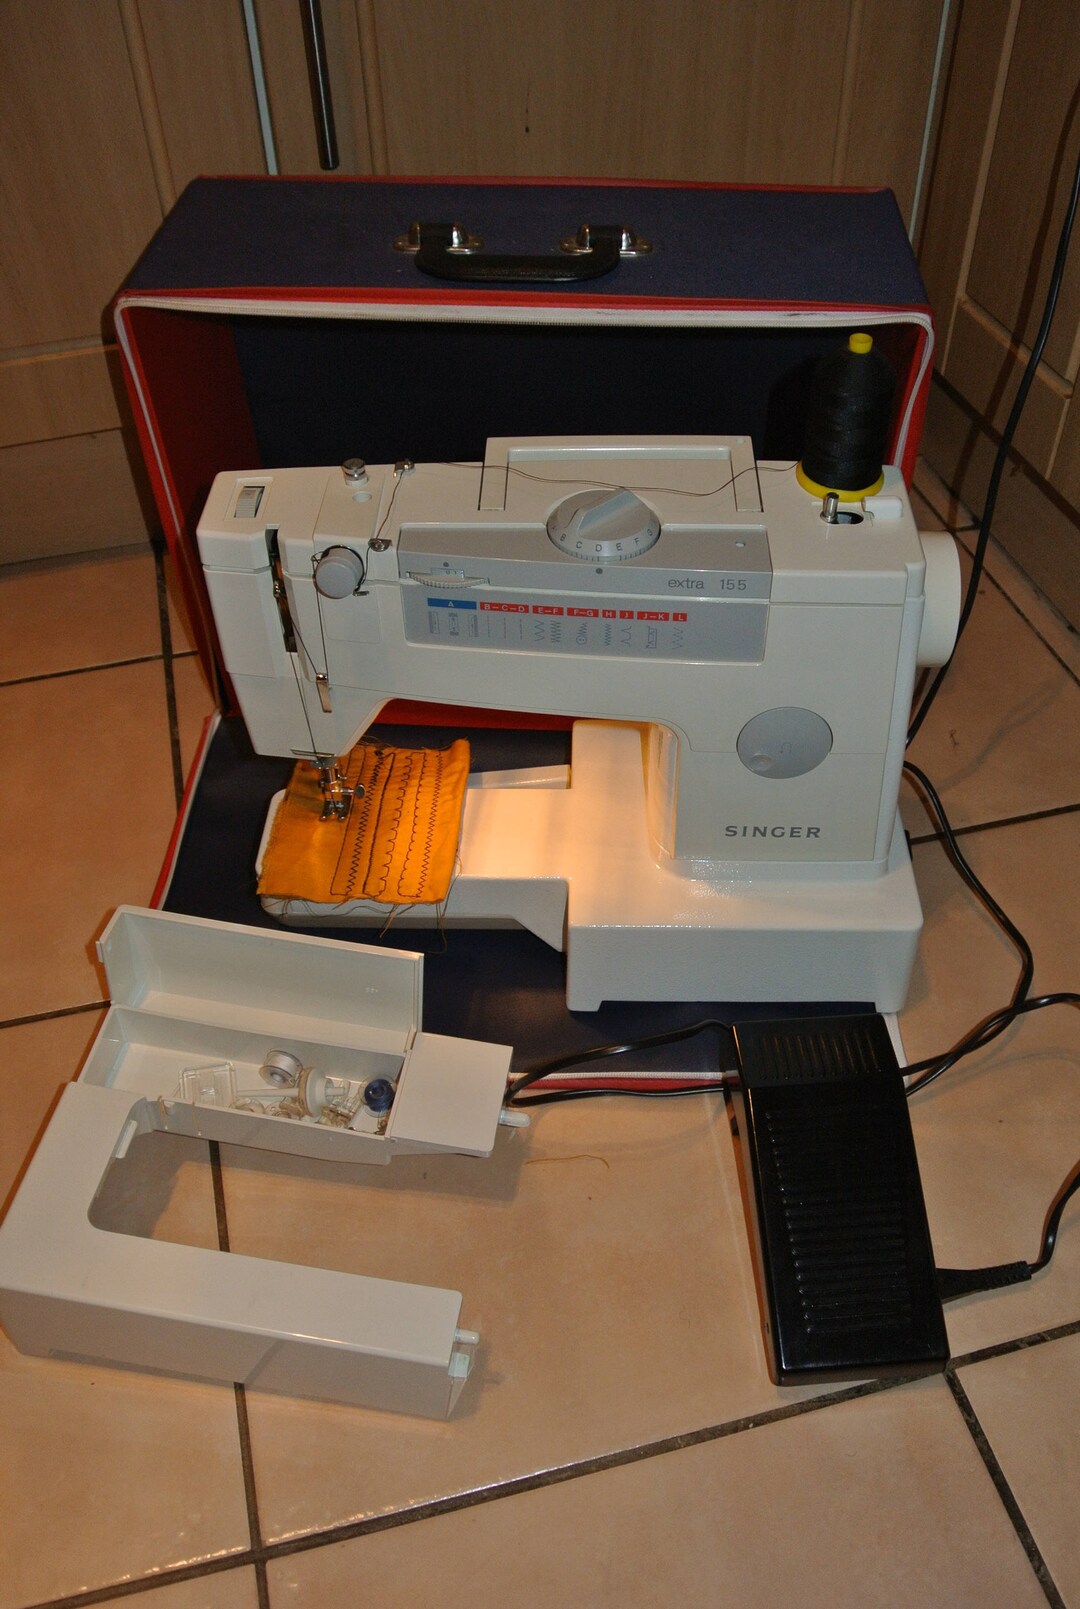 Hand Stitching Sewing Machine at Rs 155